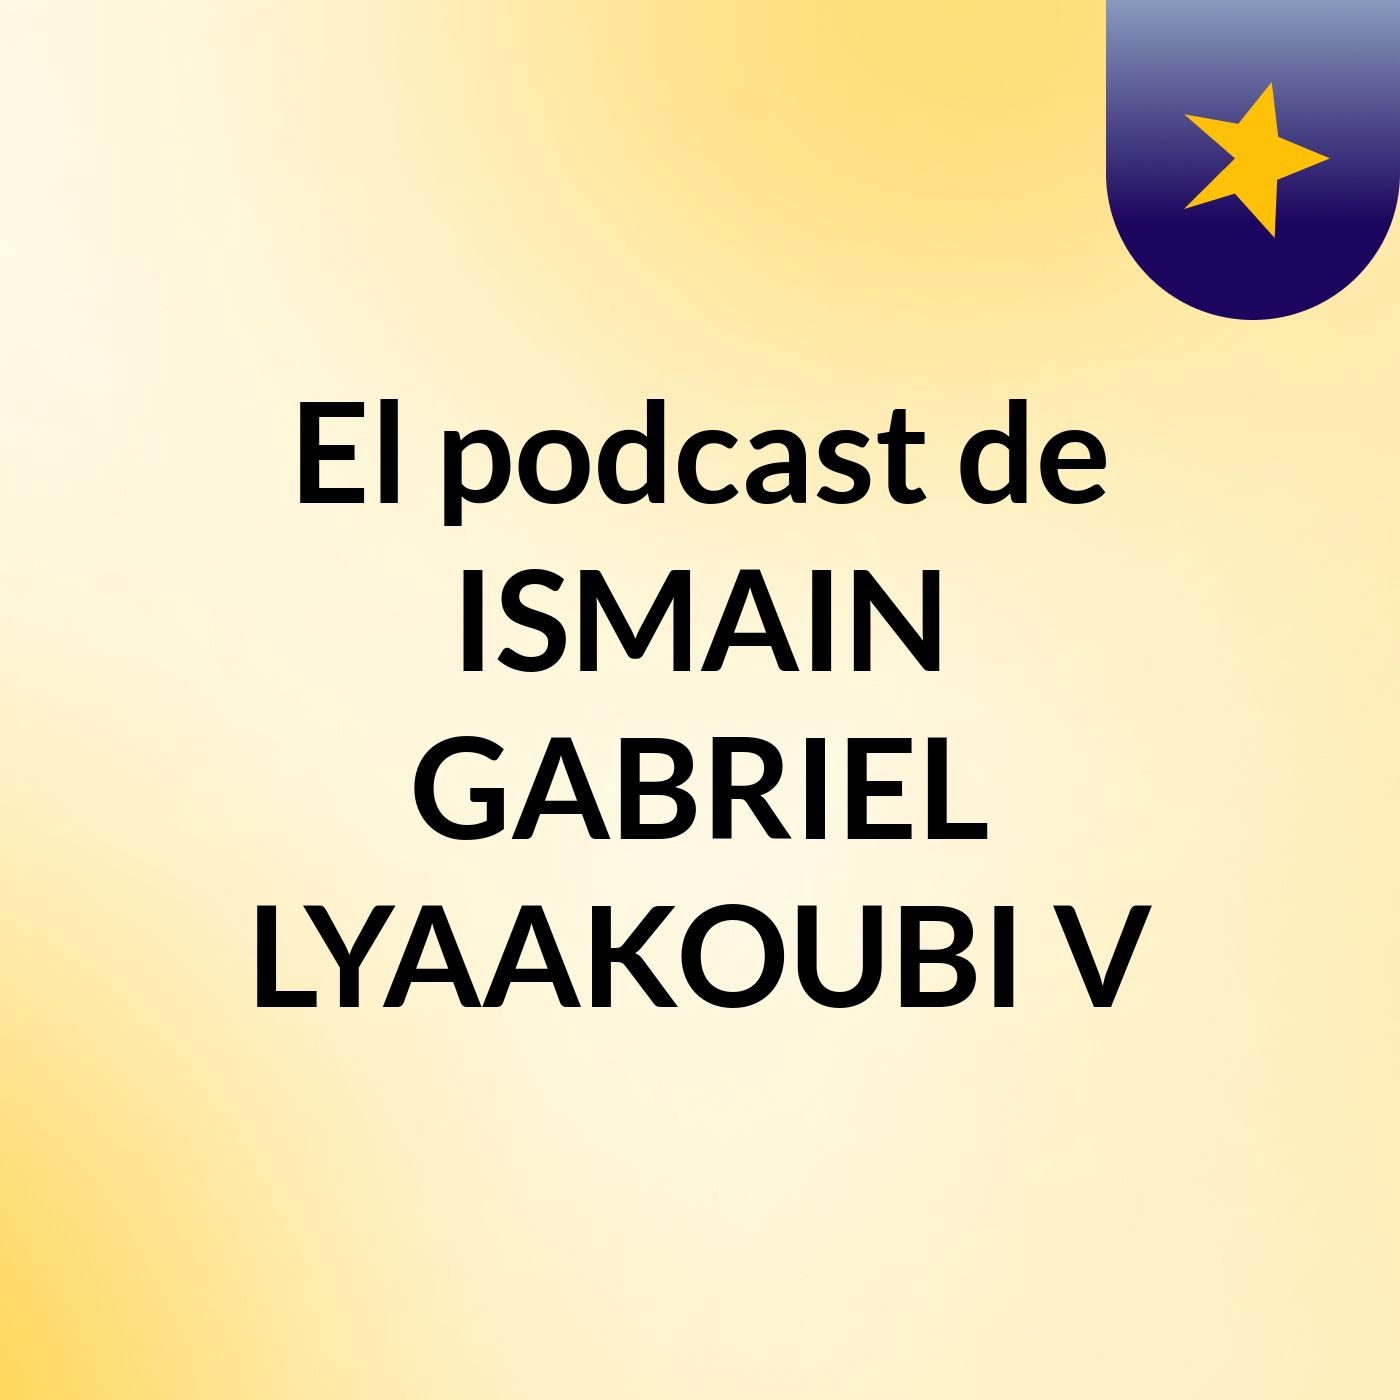 Episodio 6 - El podcast de ISMAIN GABRIEL LYAAKOUBI V